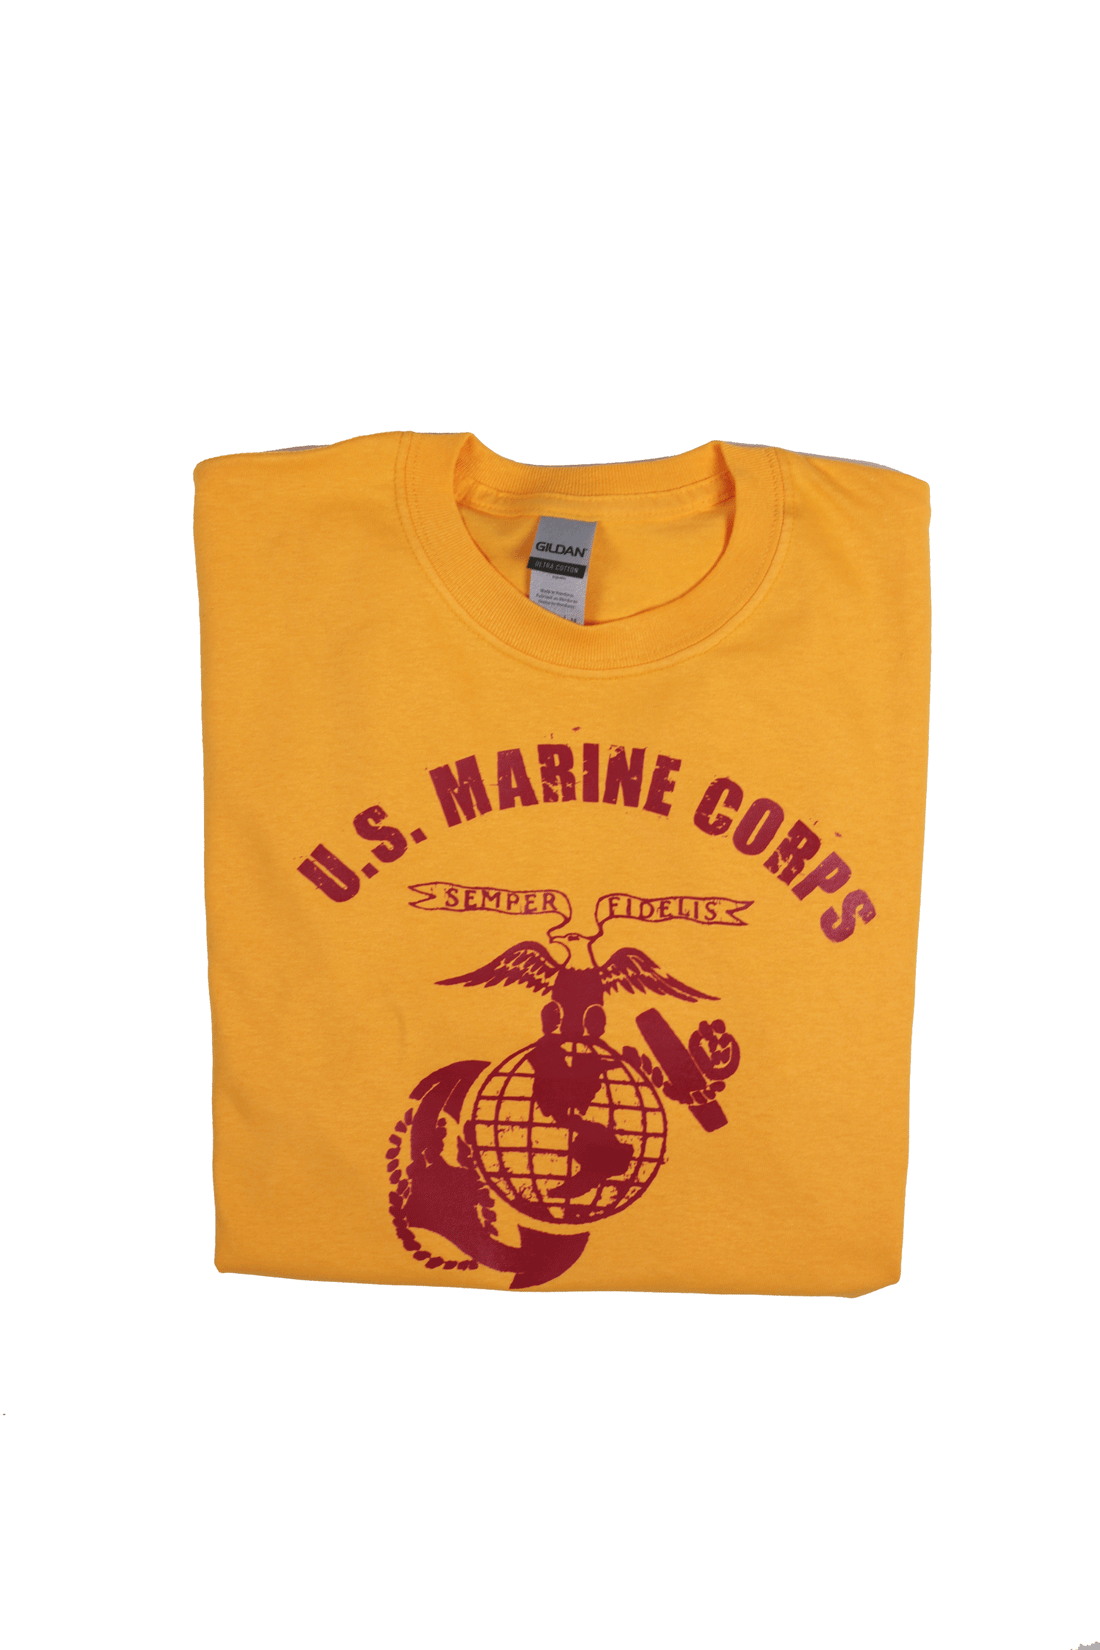 Us Marines T-Shirt